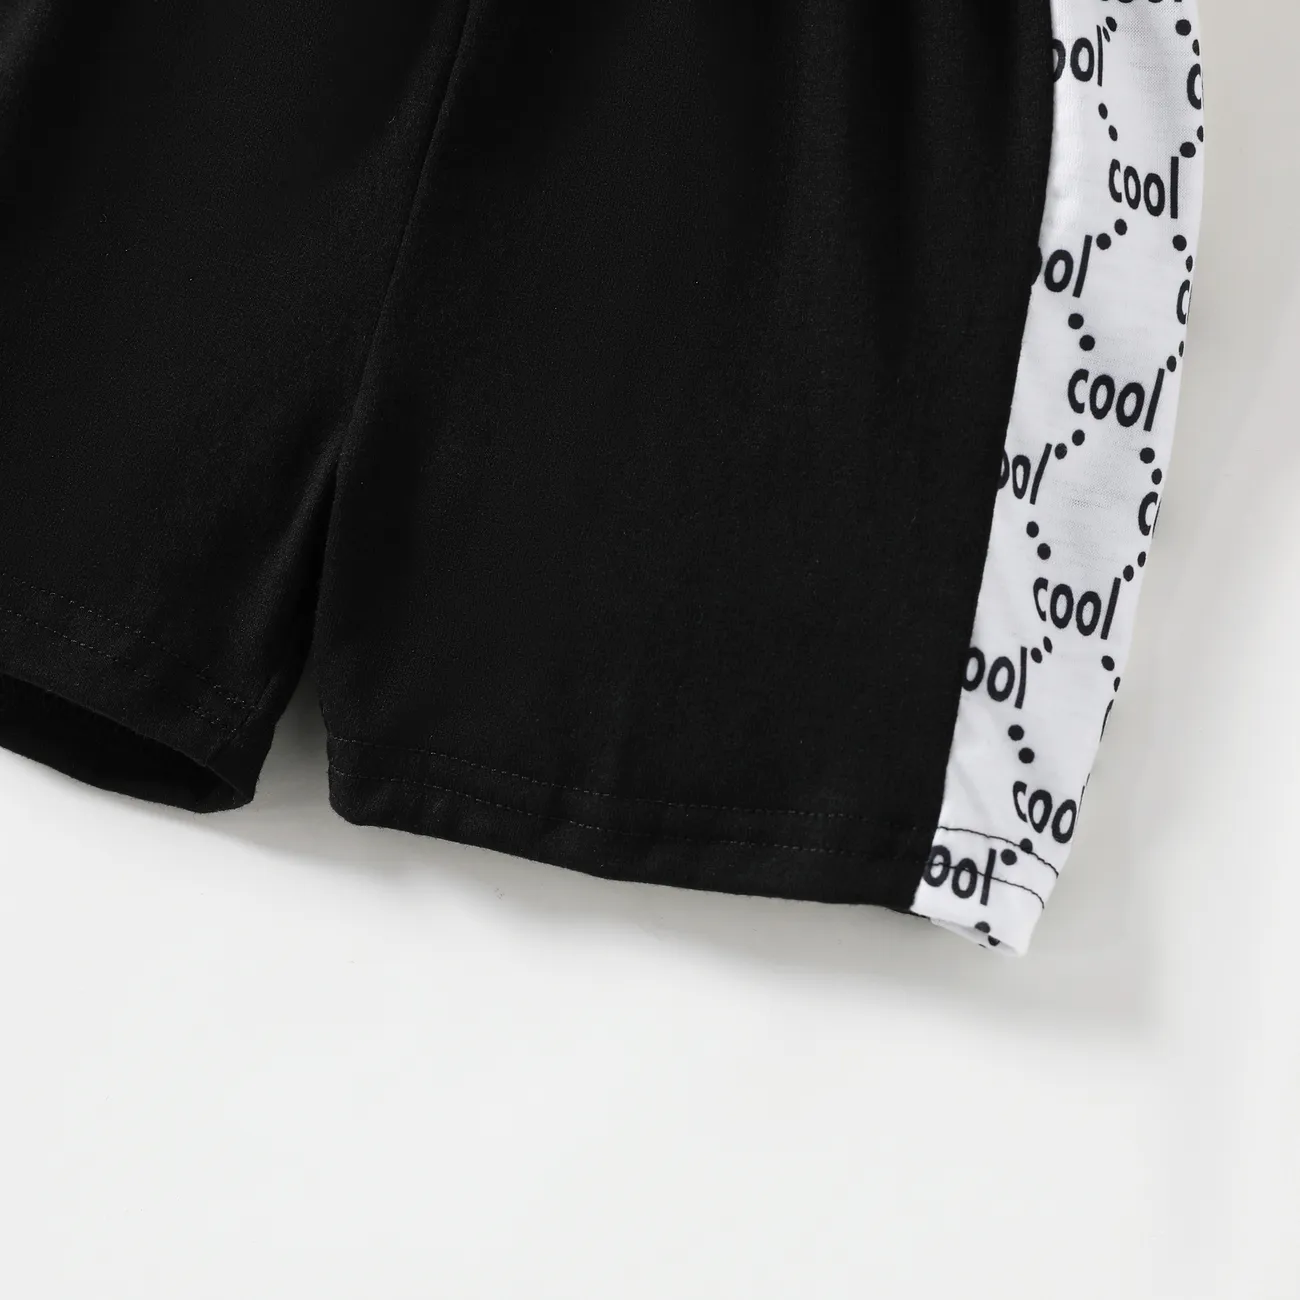 Boy's Short Sleeve Shirt and Black Shorts Set, Avant-garde Style with Shirt Collar, 2pcs Black big image 1